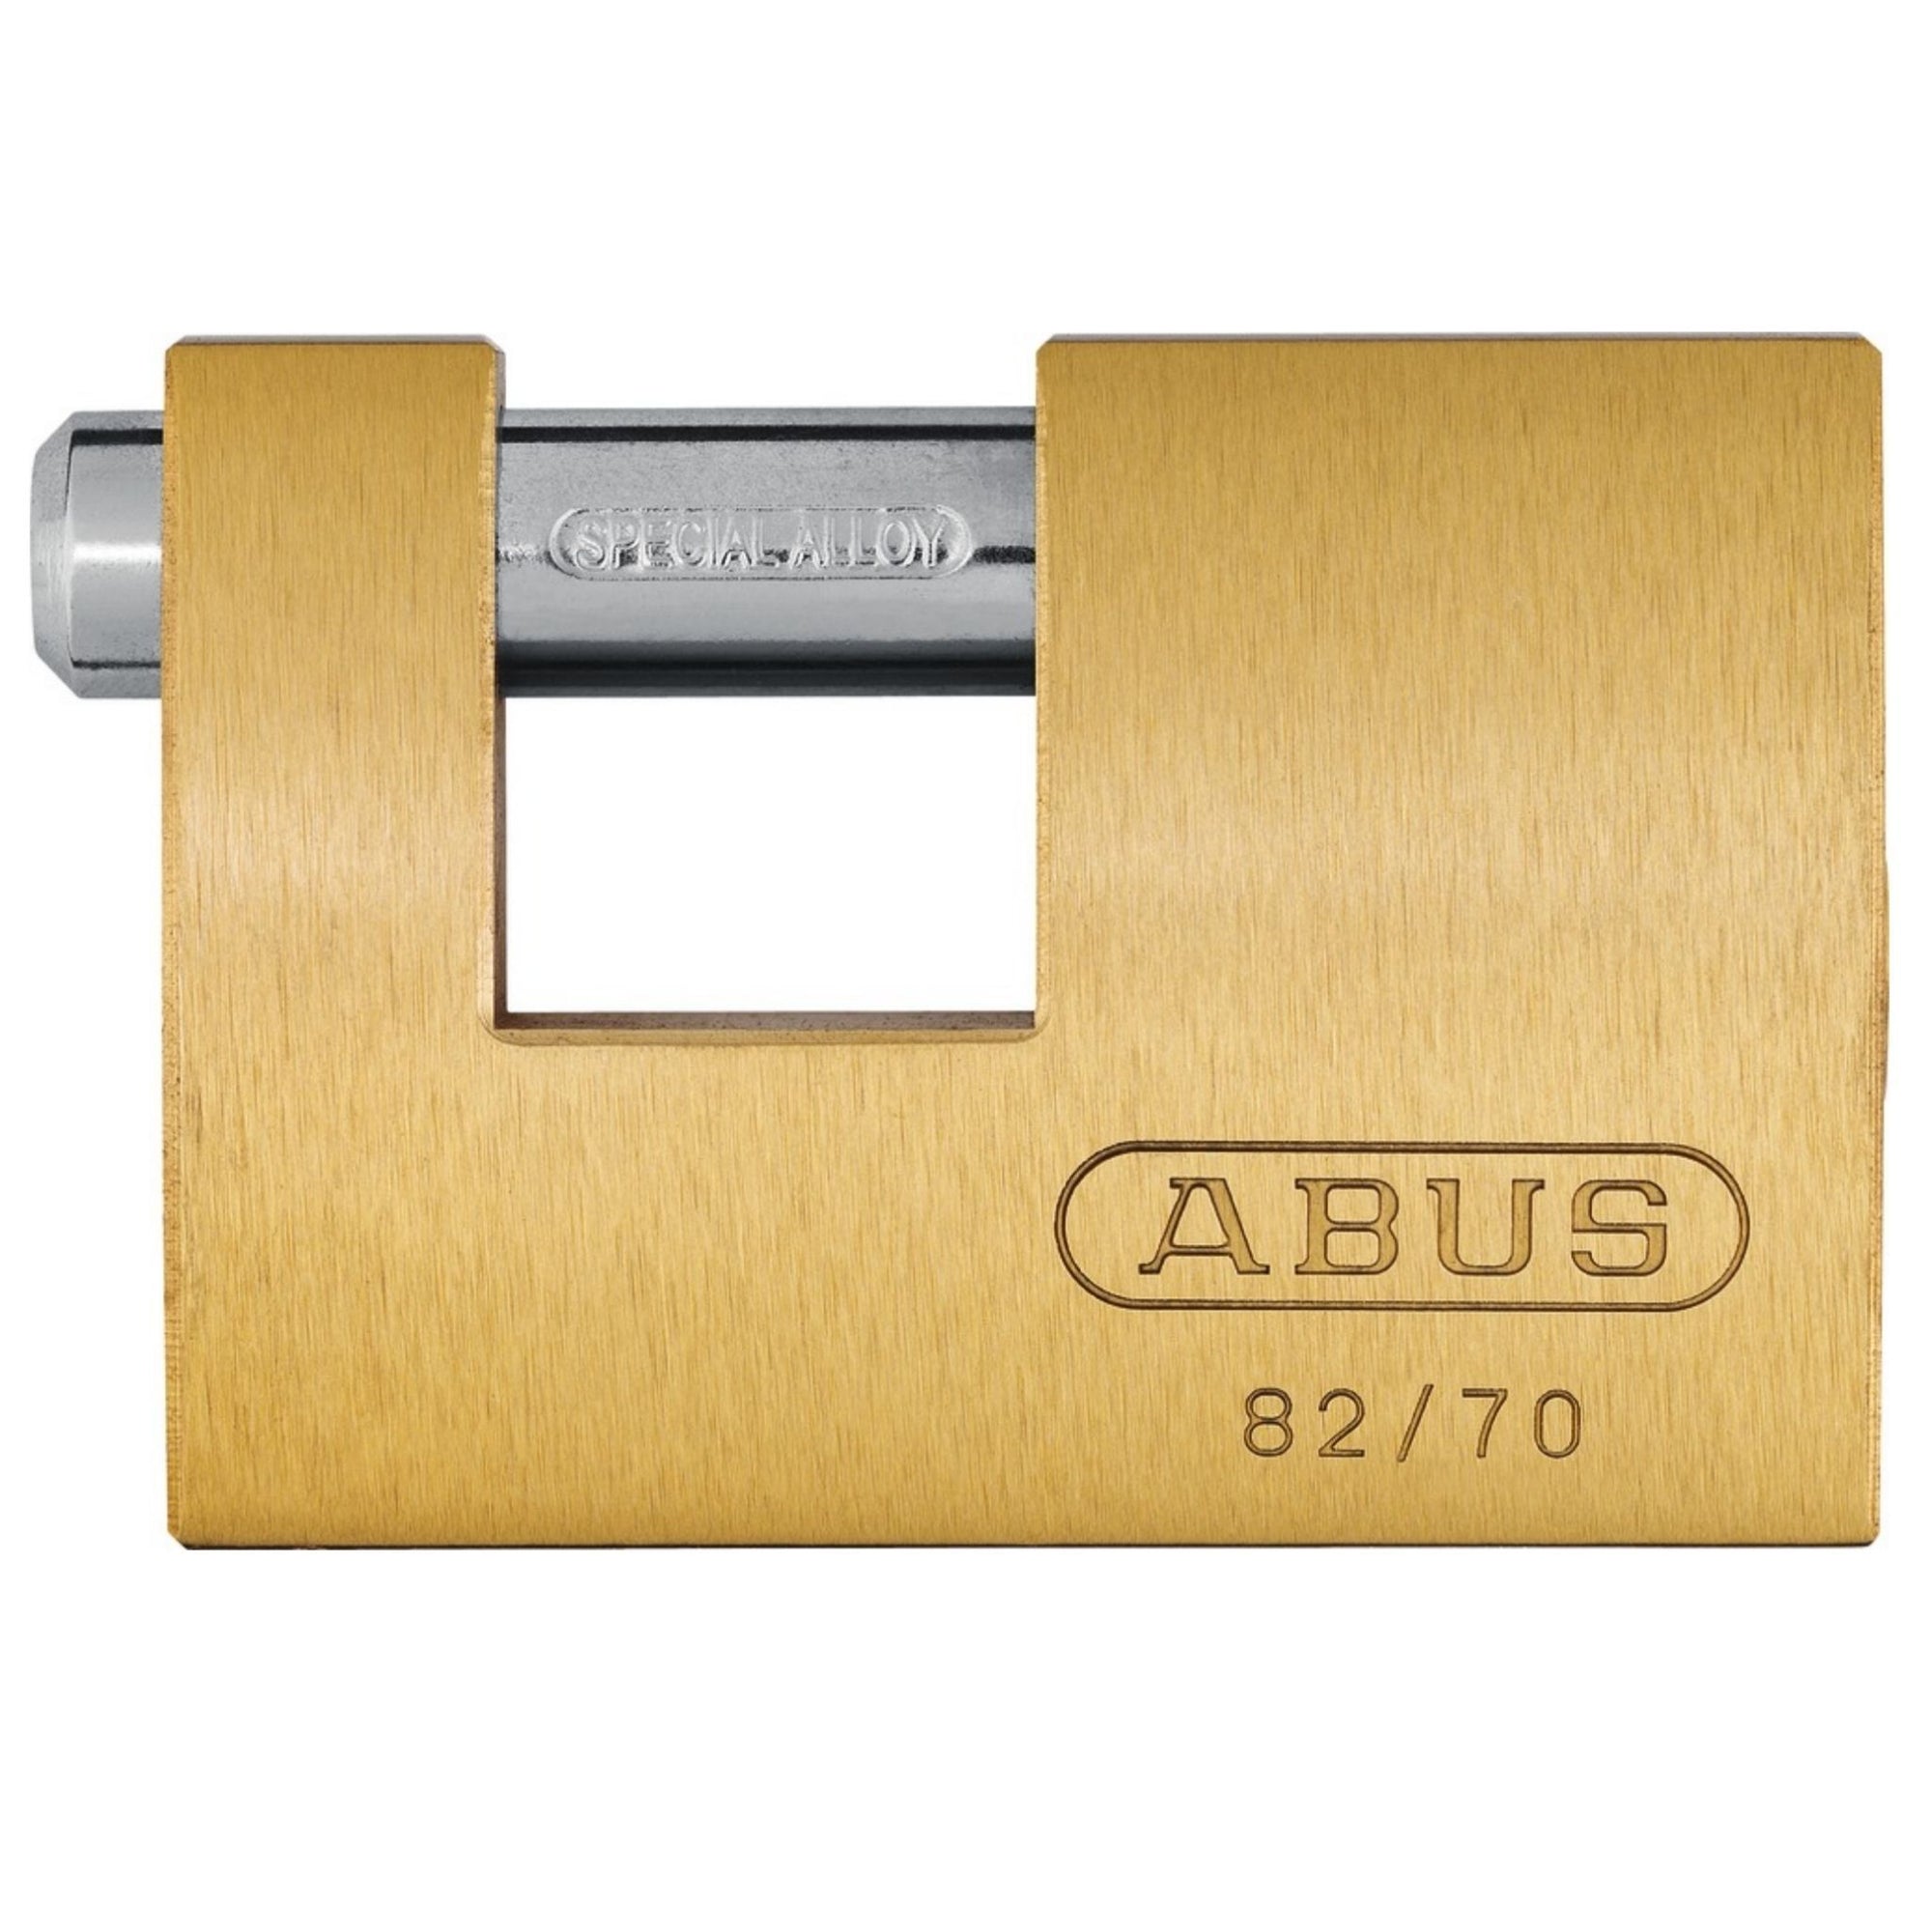 Abus 82/70 KA 8514 Monoblock Lock Keyed Alike Brass Mono Padlocks Match Existing Key# KA8514 - The Lock Source